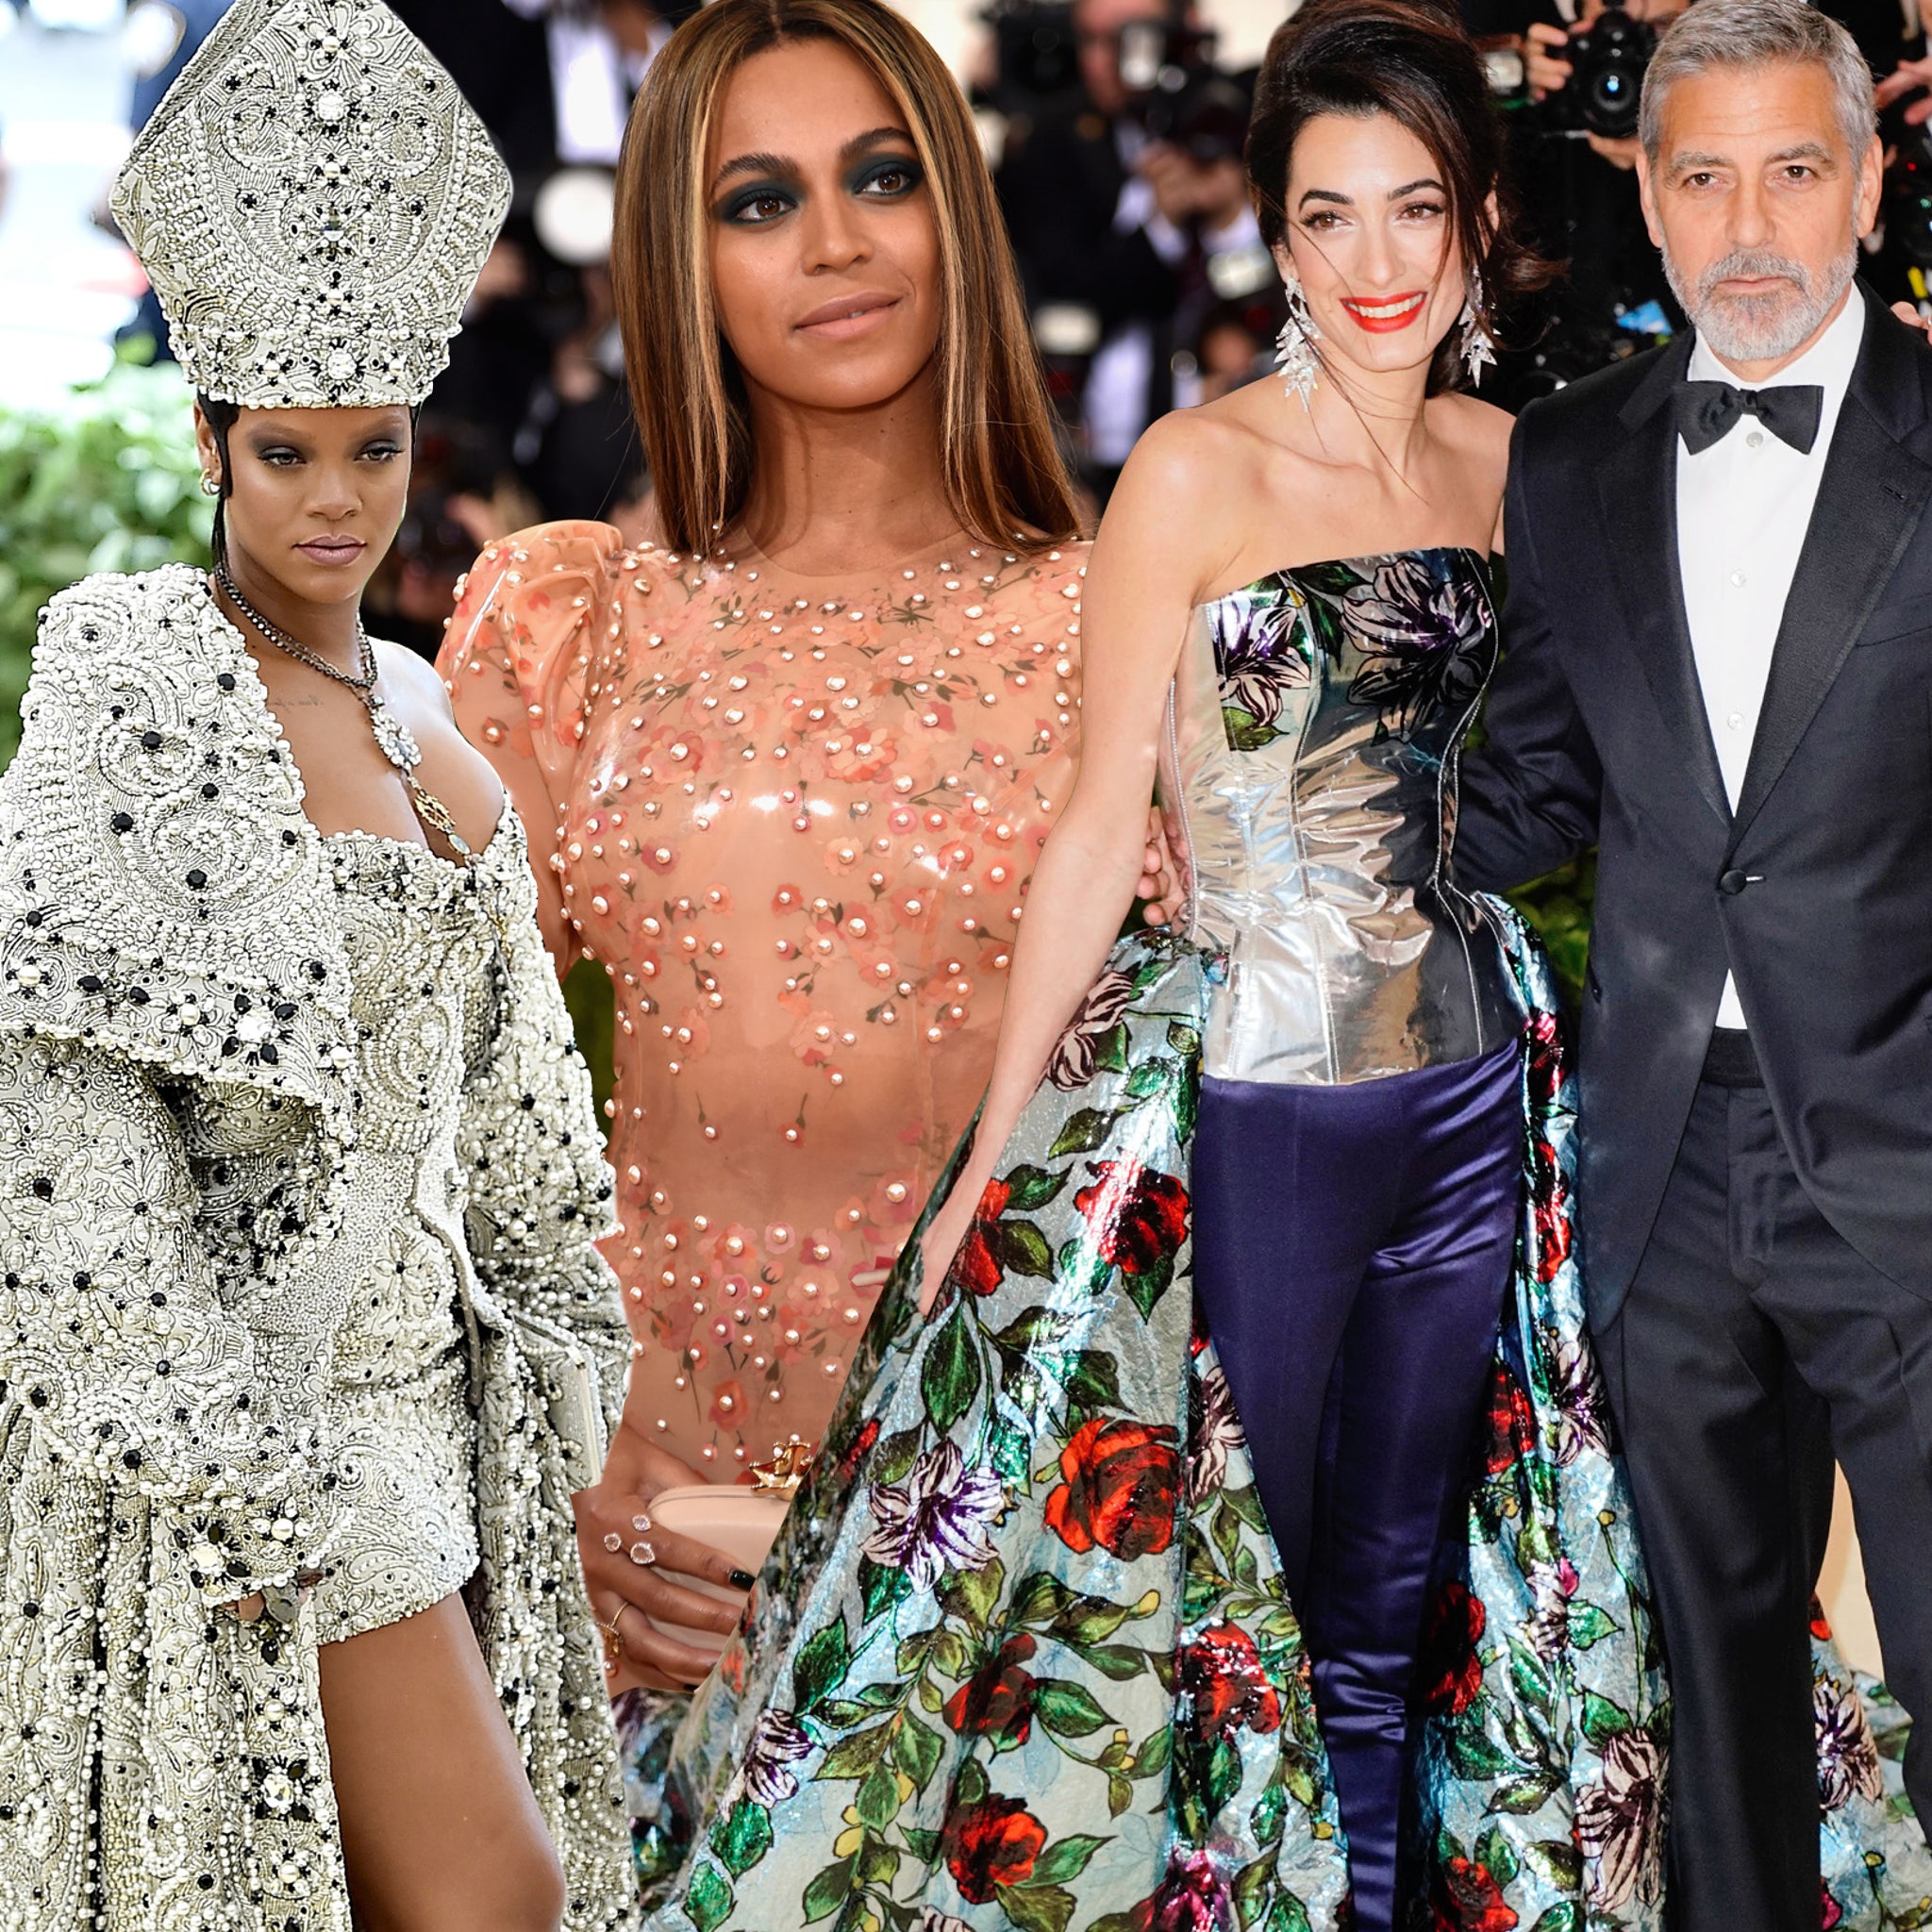 Met Gala: Beyonce, Taylor Swift, Rihanna, Bradley Cooper skip event